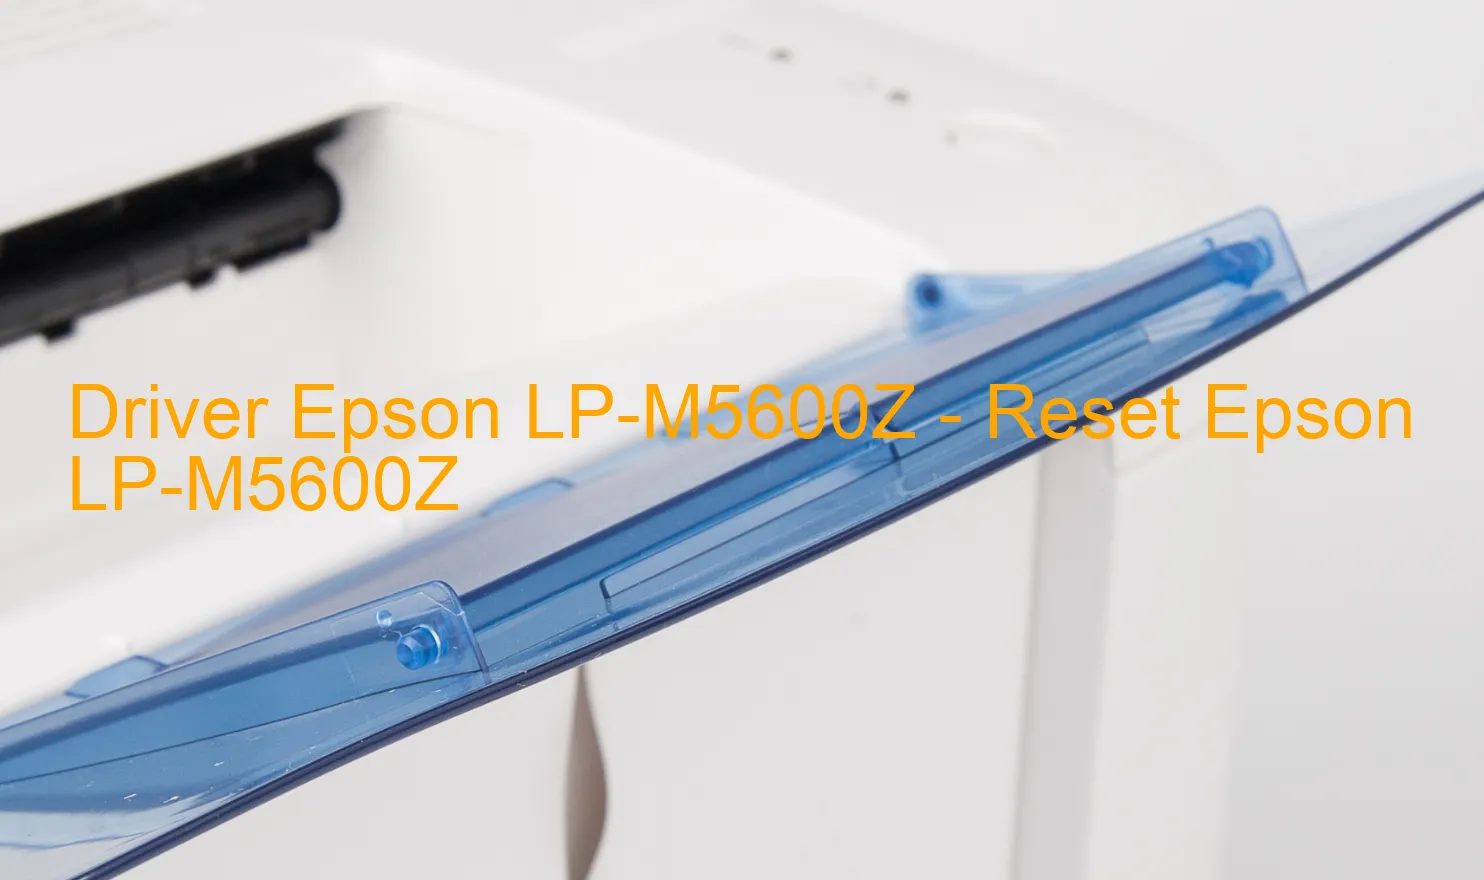 Epson LP-M5600Zのドライバー、Epson LP-M5600Zのリセットソフトウェア